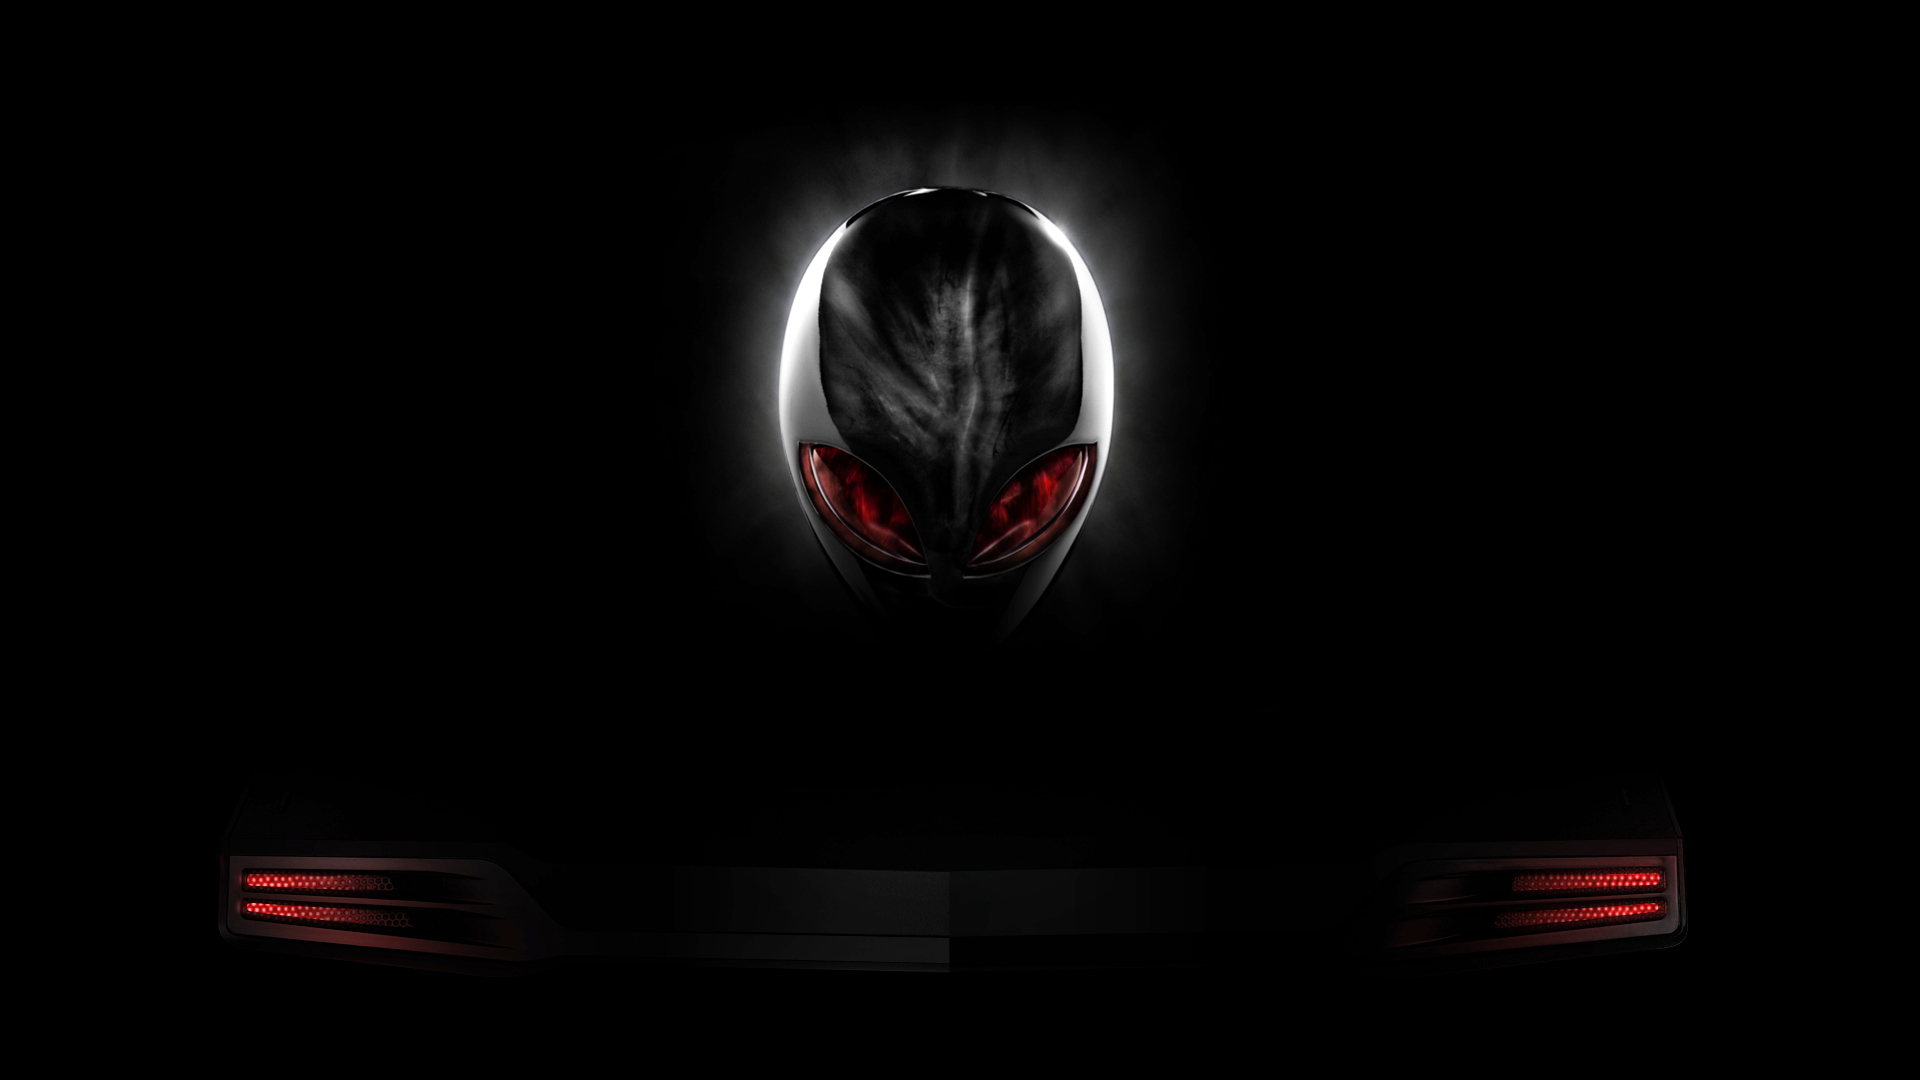 alienware red eyes logo black background hd 1920x1080 1080p wallpaper